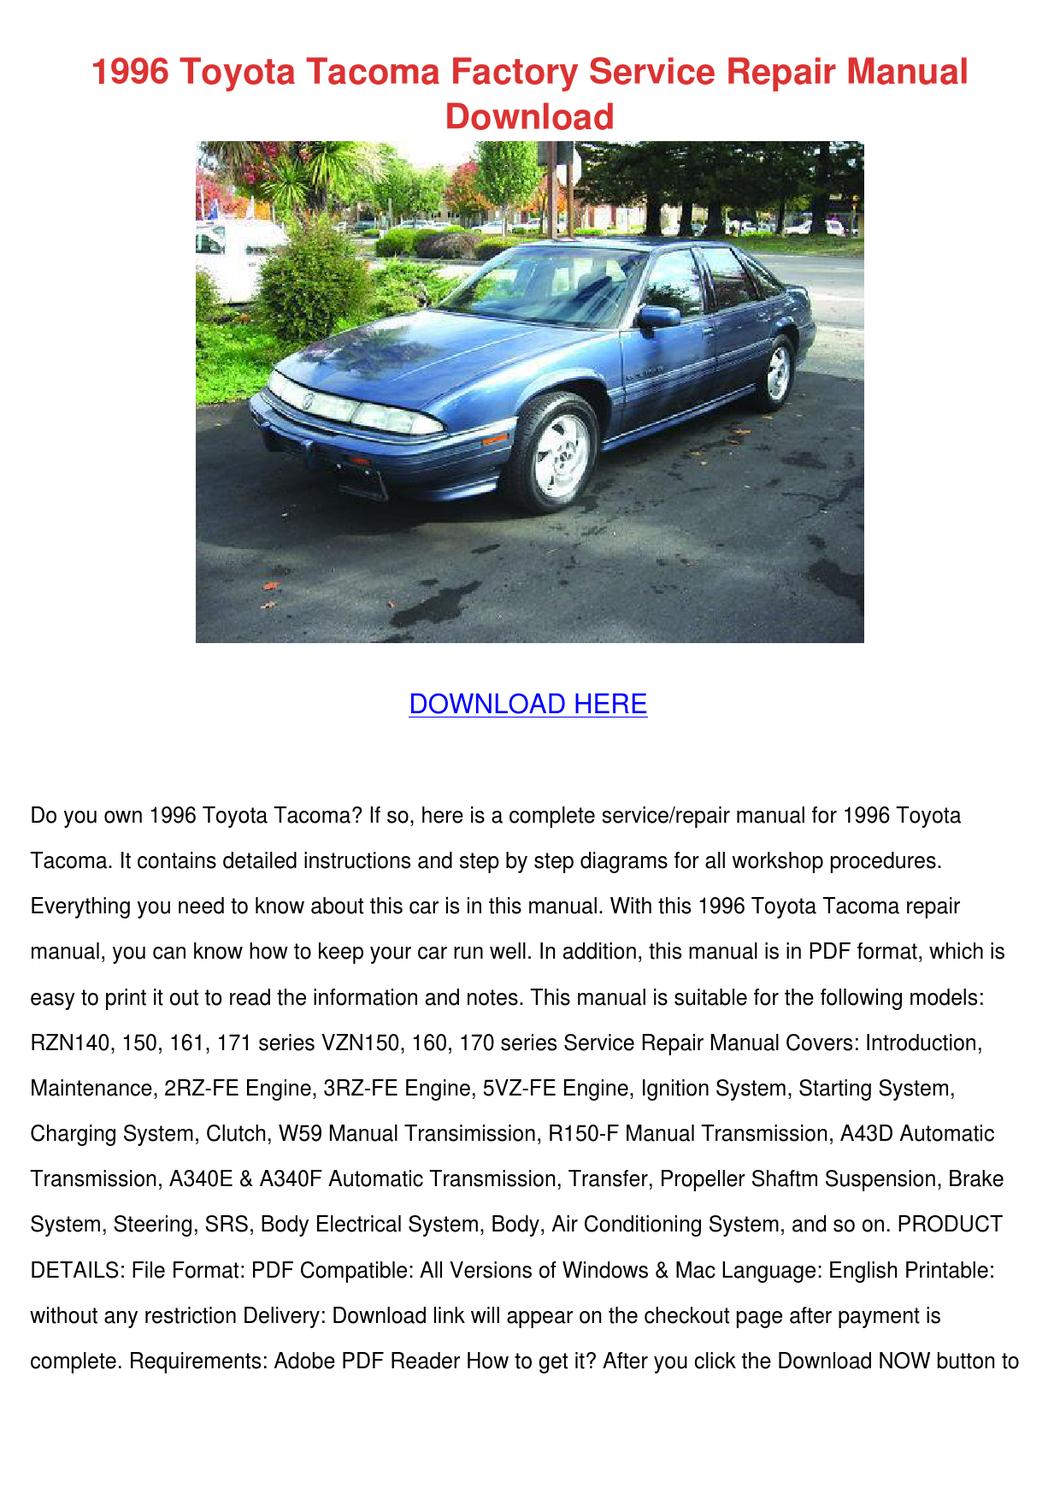 1996 Toyota Tacoma Manual Download